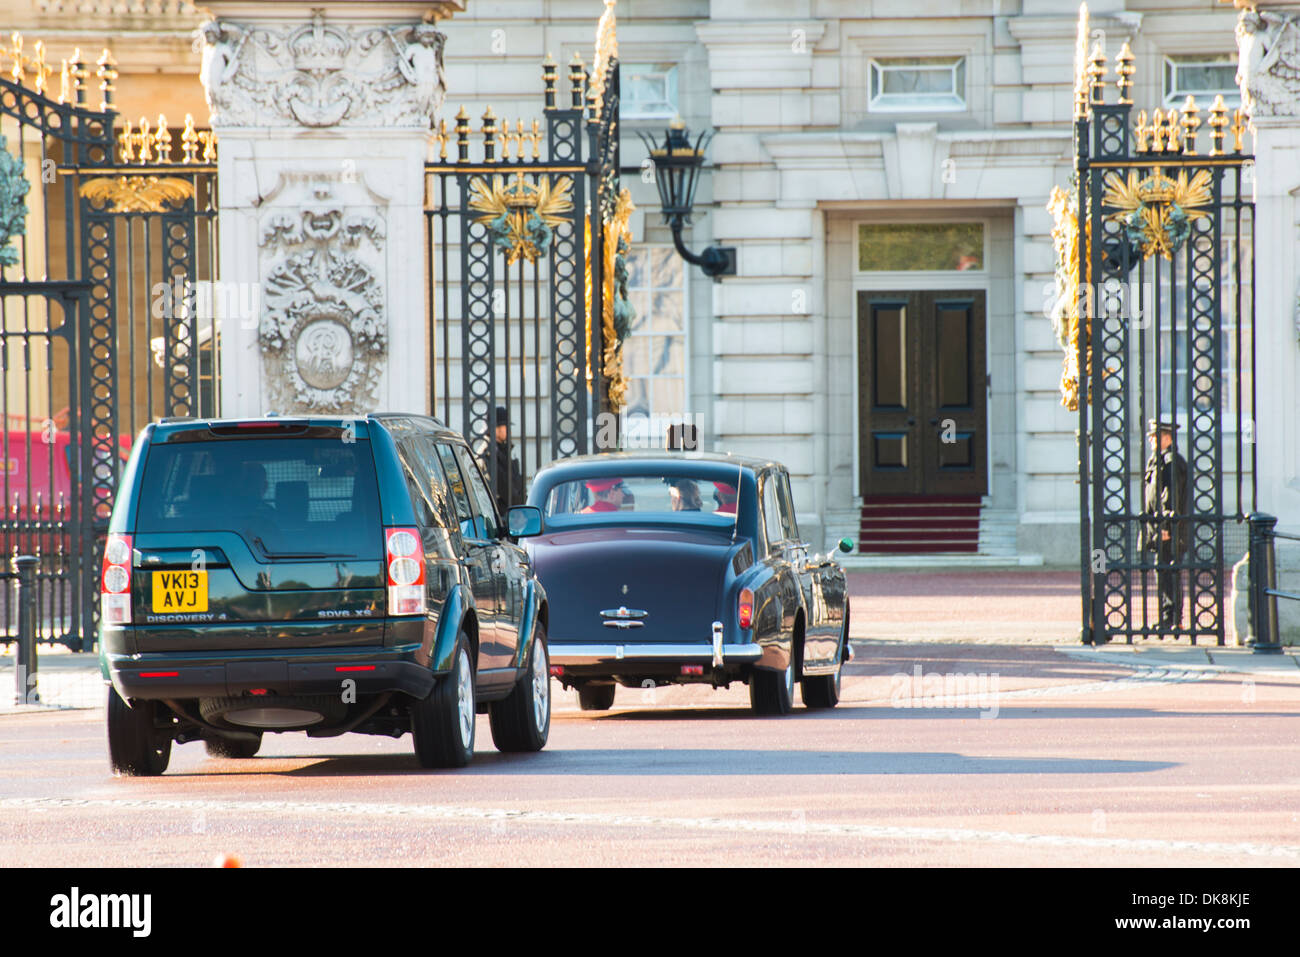 Buckingham palace and royal cars Stock Photo